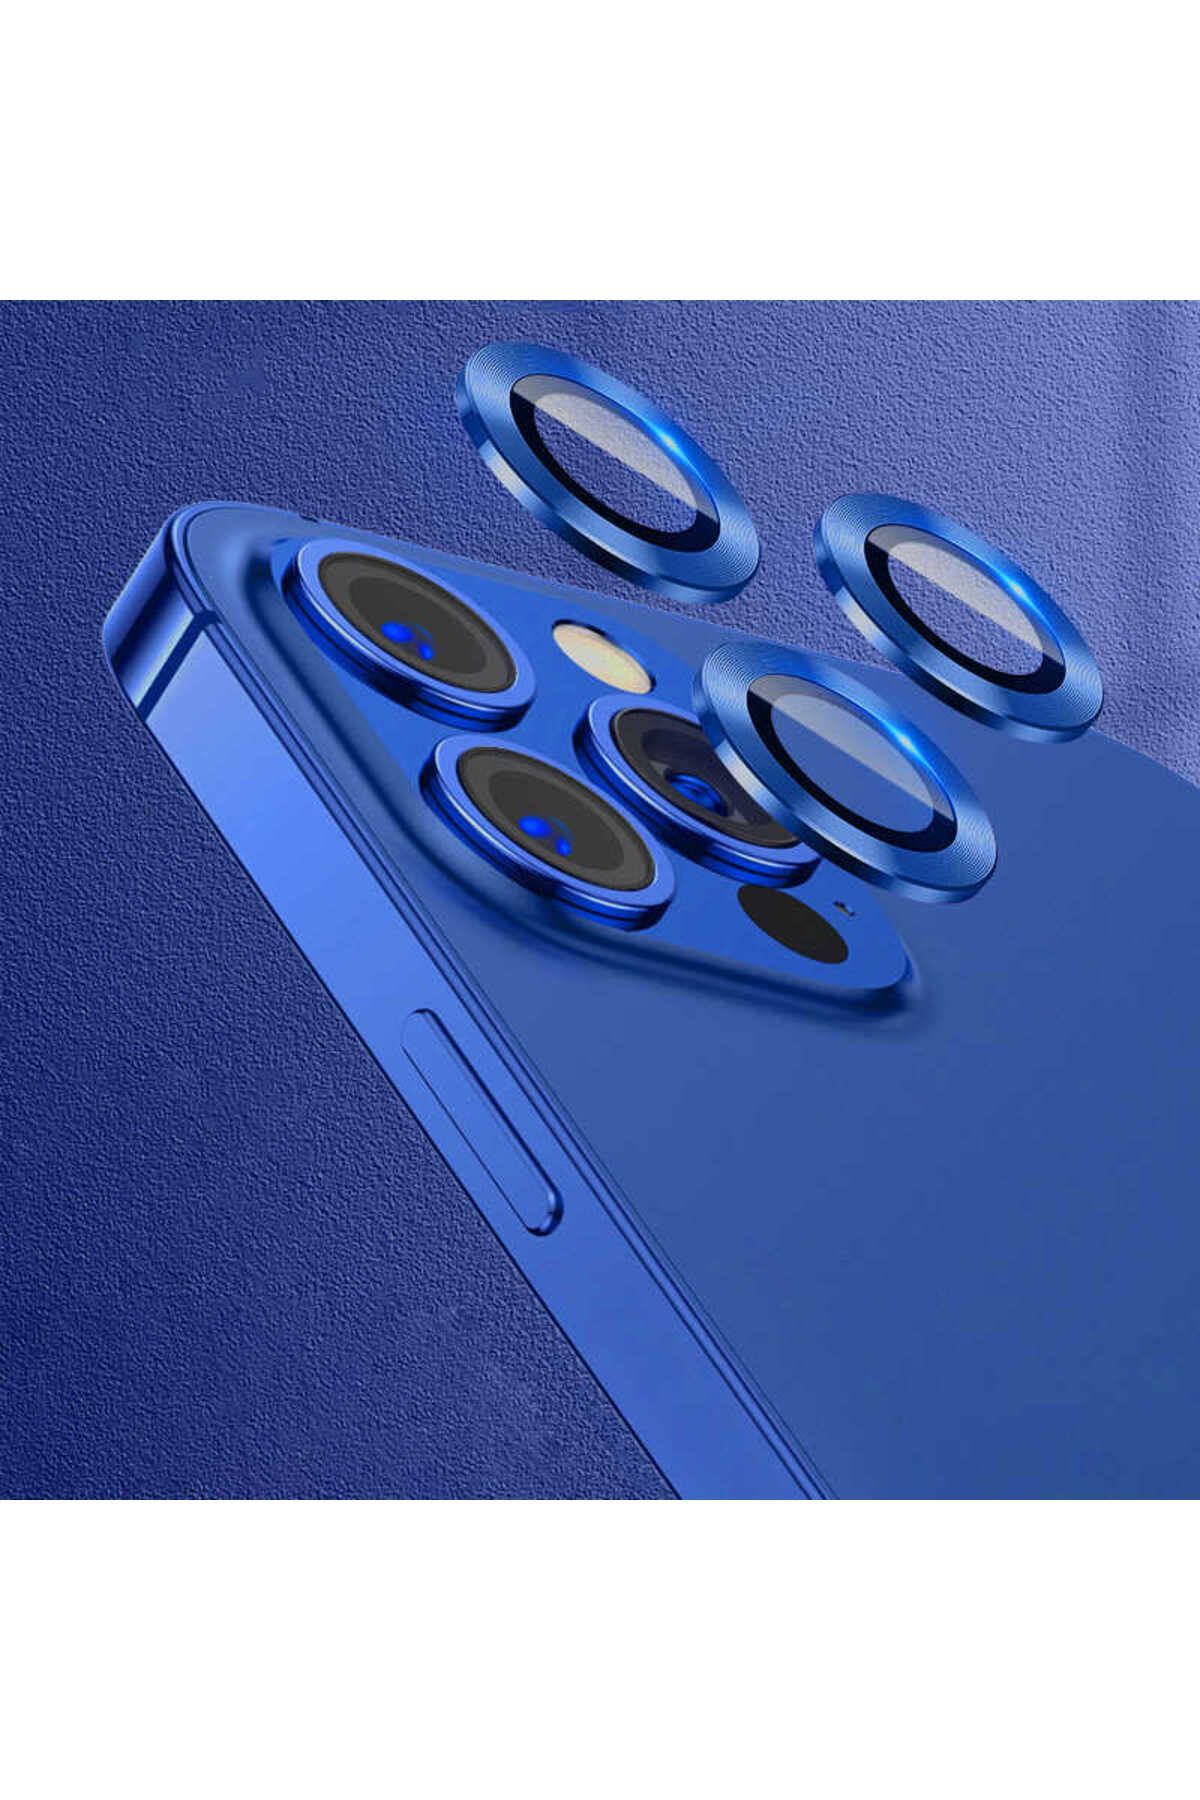 Bilişim Aksesuar iPhone 12 Pro Max Uyumlu Zore CL-07 Kamera Lens Koruyucu-Lacivert